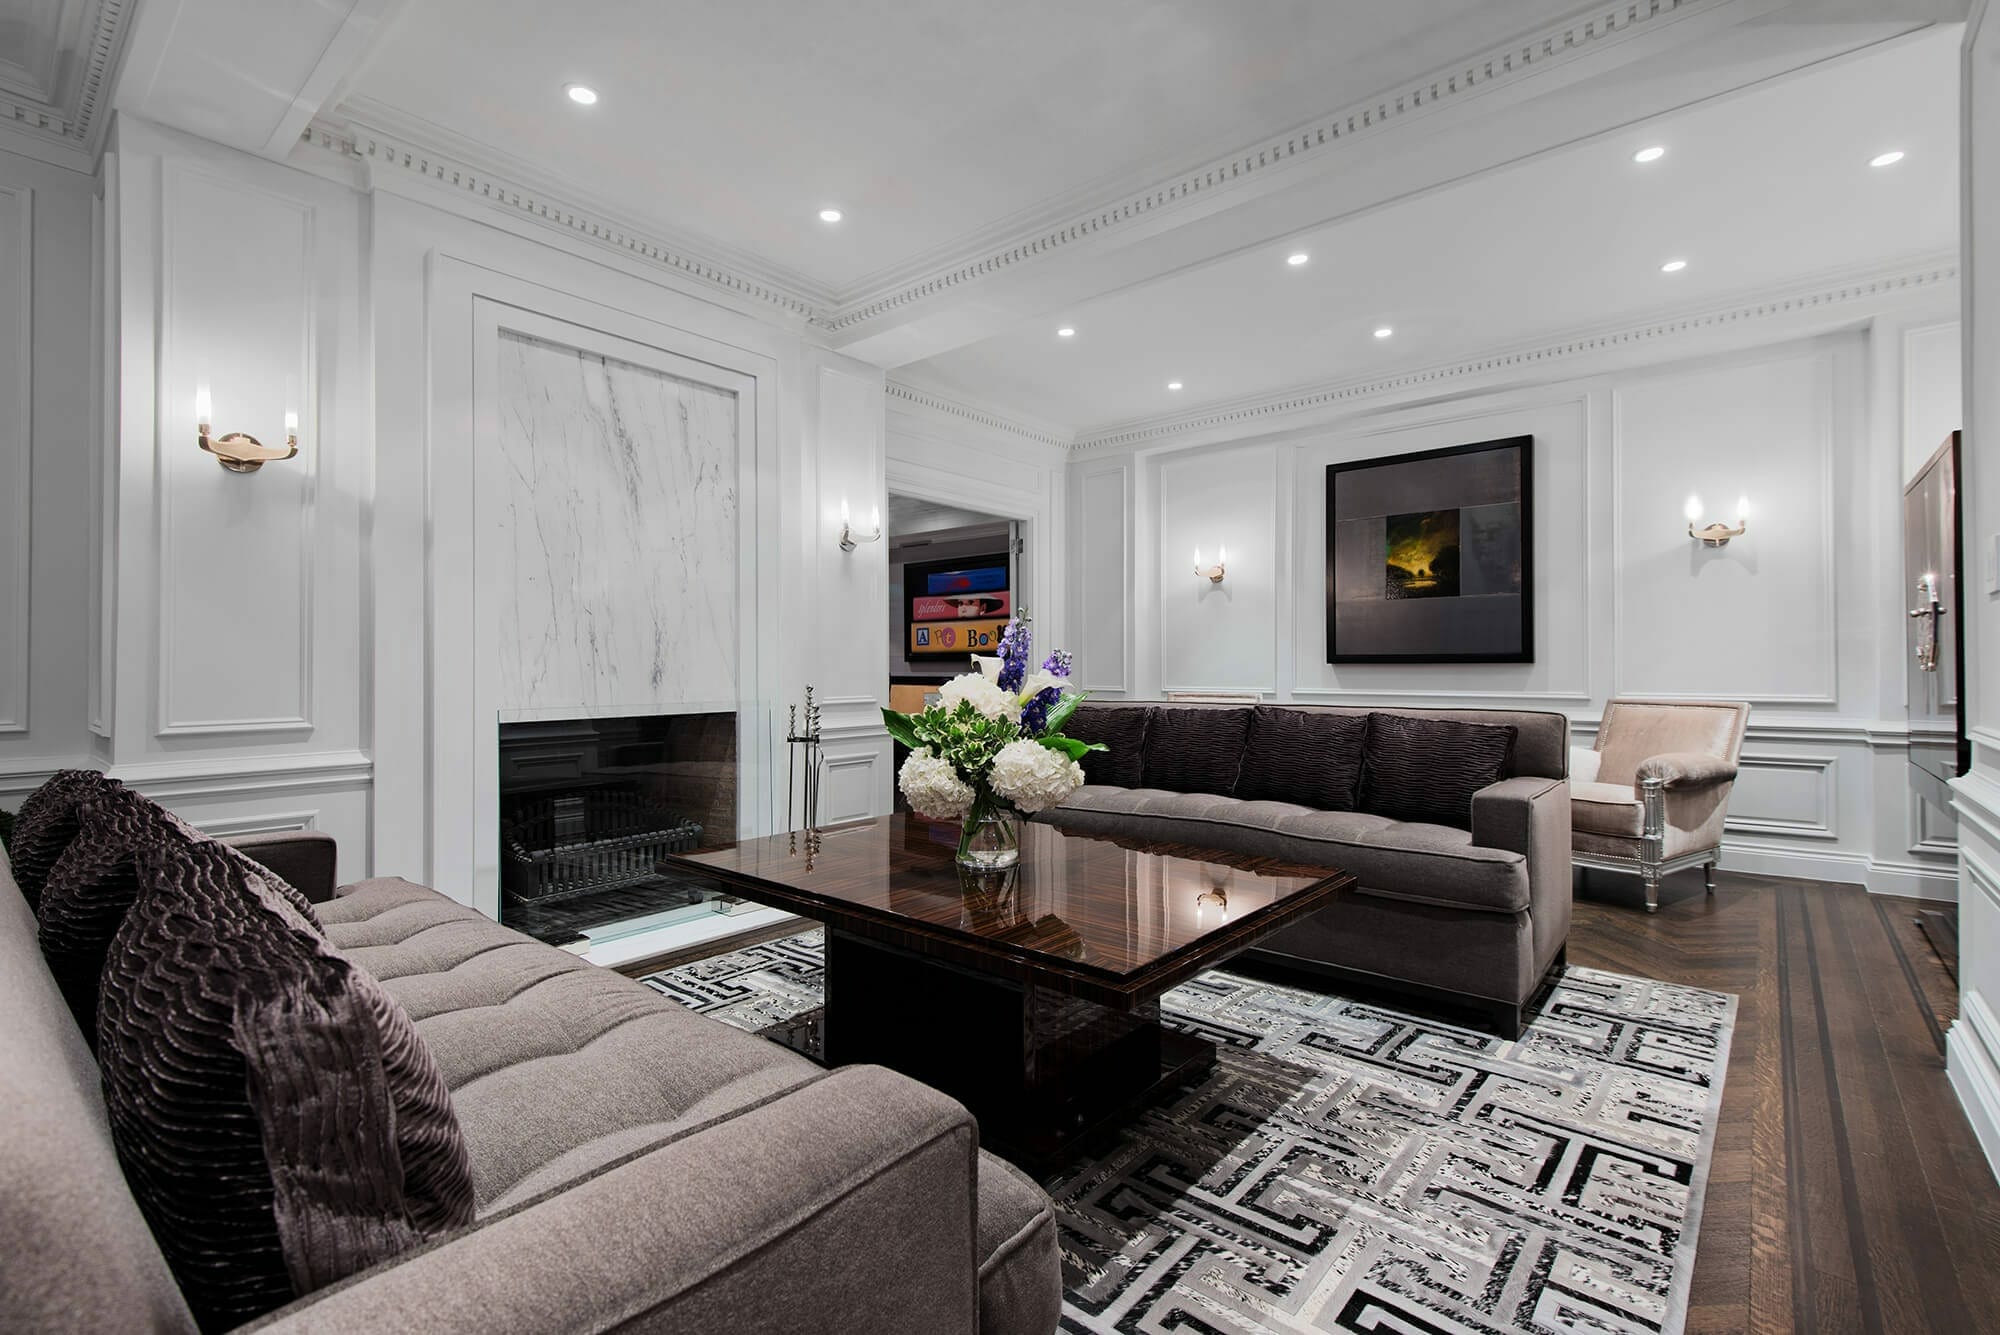 Luxury transitional sitting room by top miami interior designer britto charette